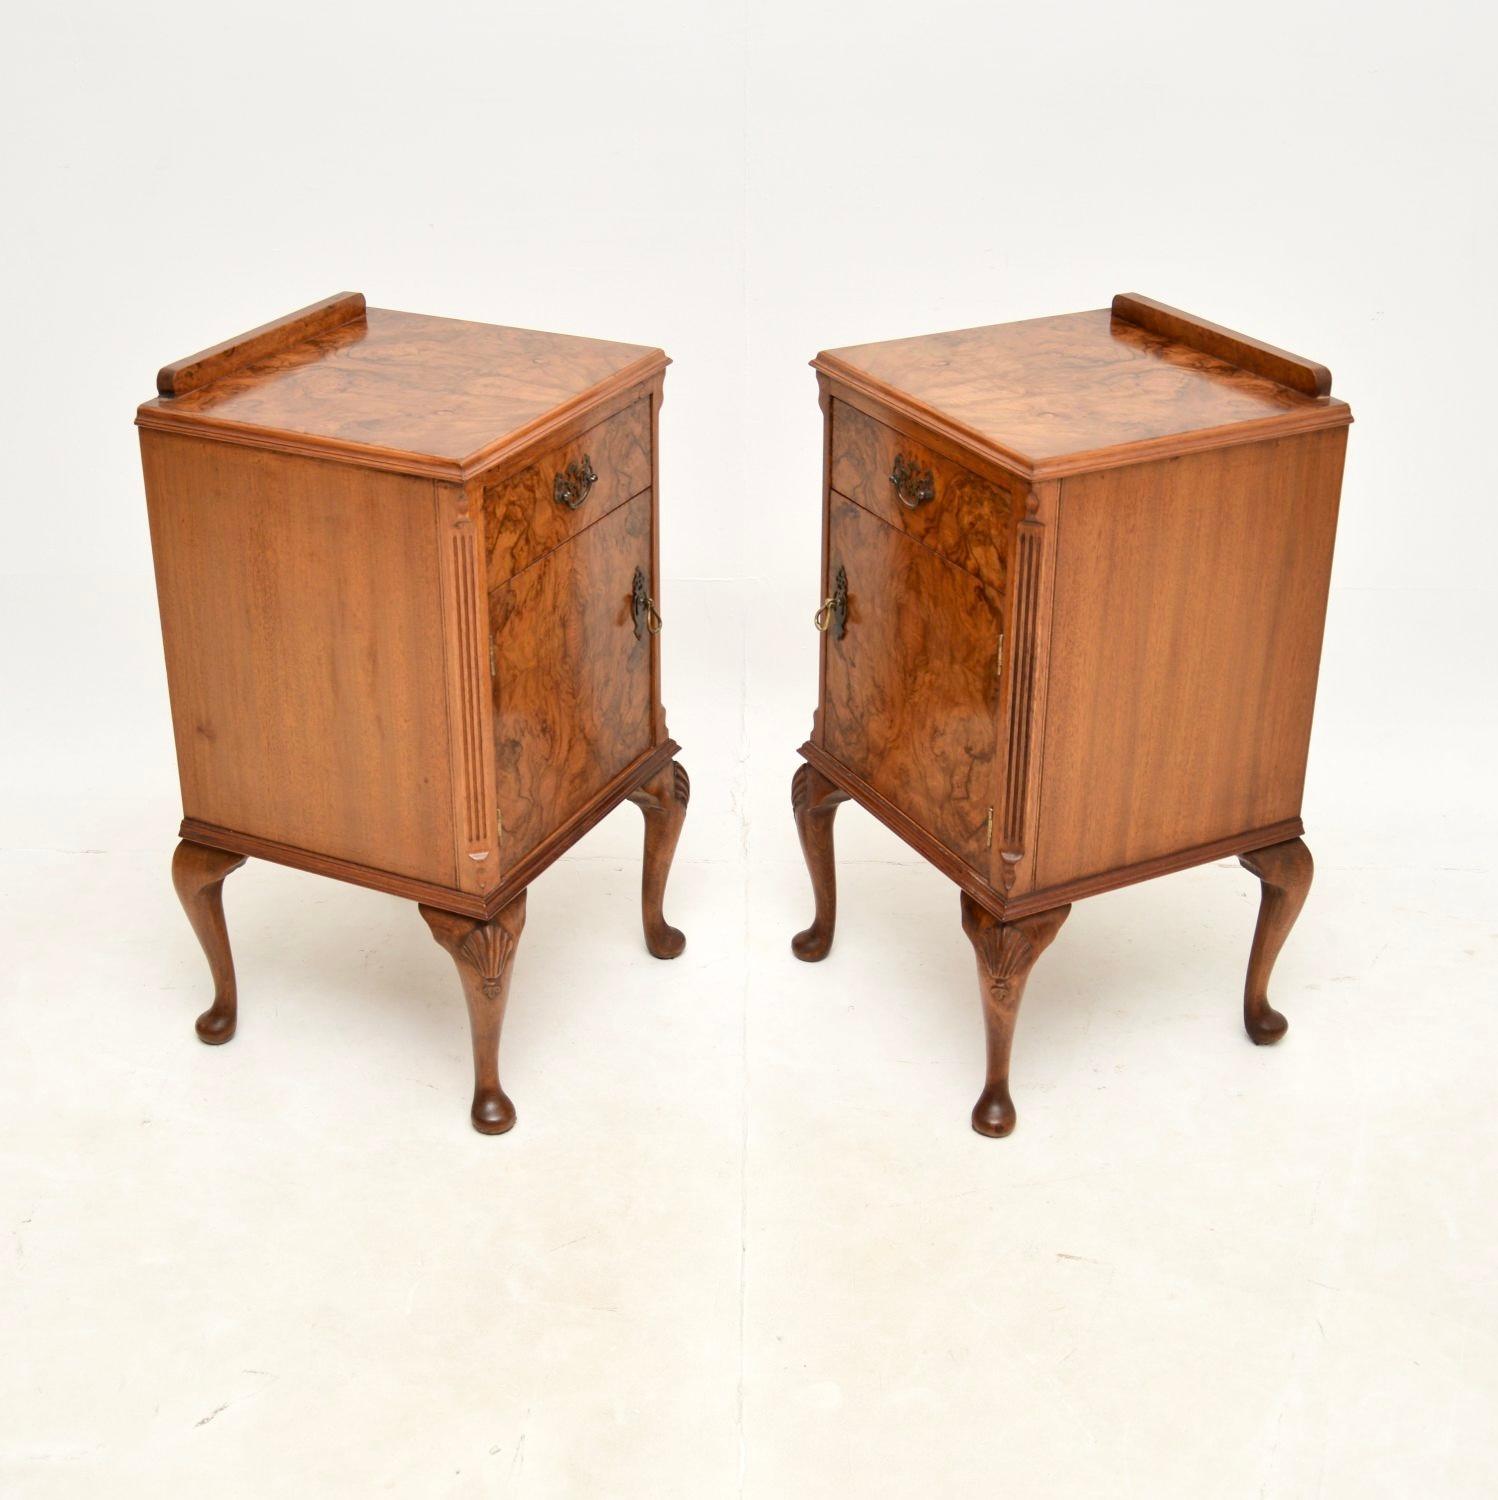 British Pair of Antique Figured Walnut Bedside Cabinets